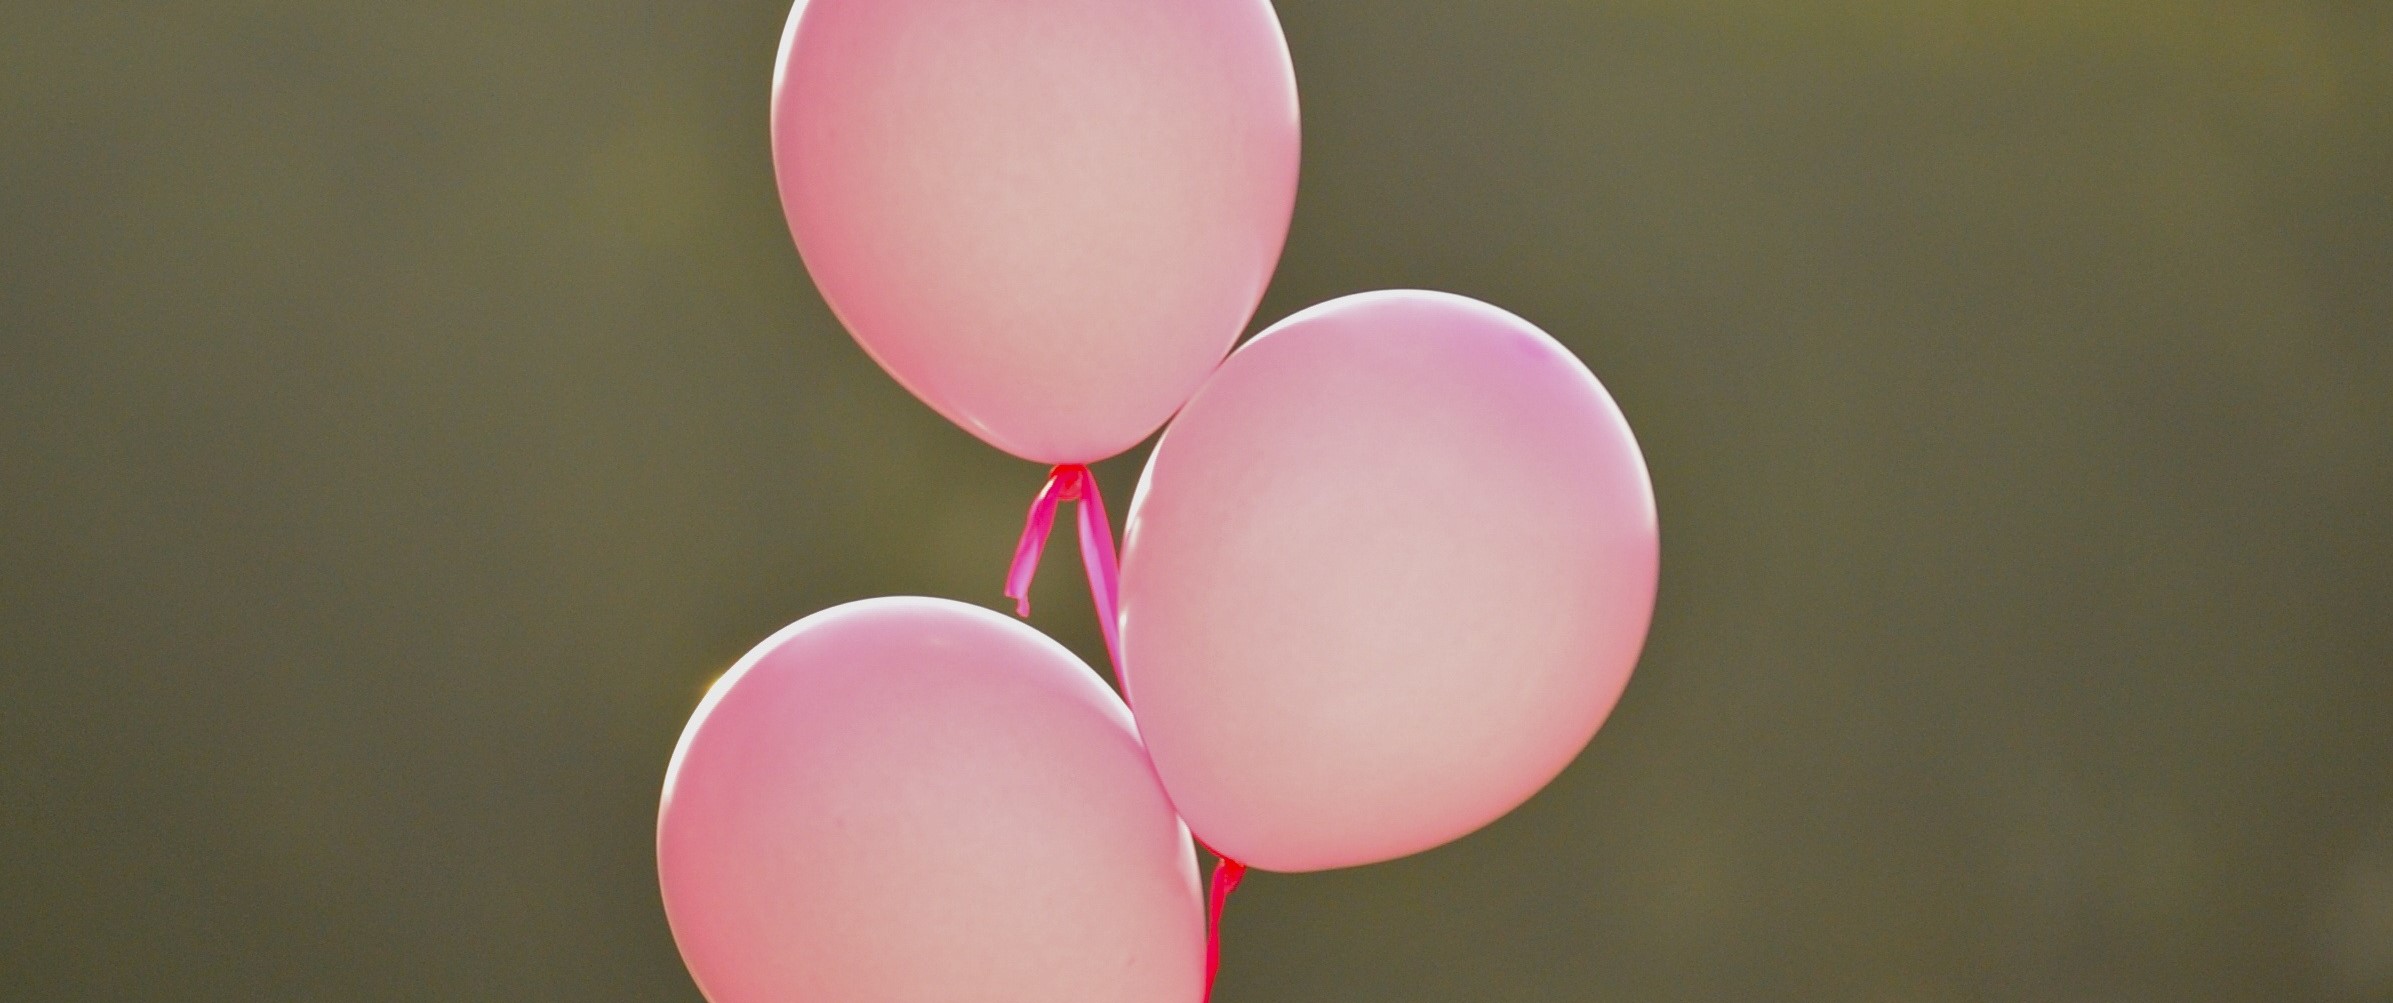 Pink Balloon in Newport News - CarDonations4Cancer.org